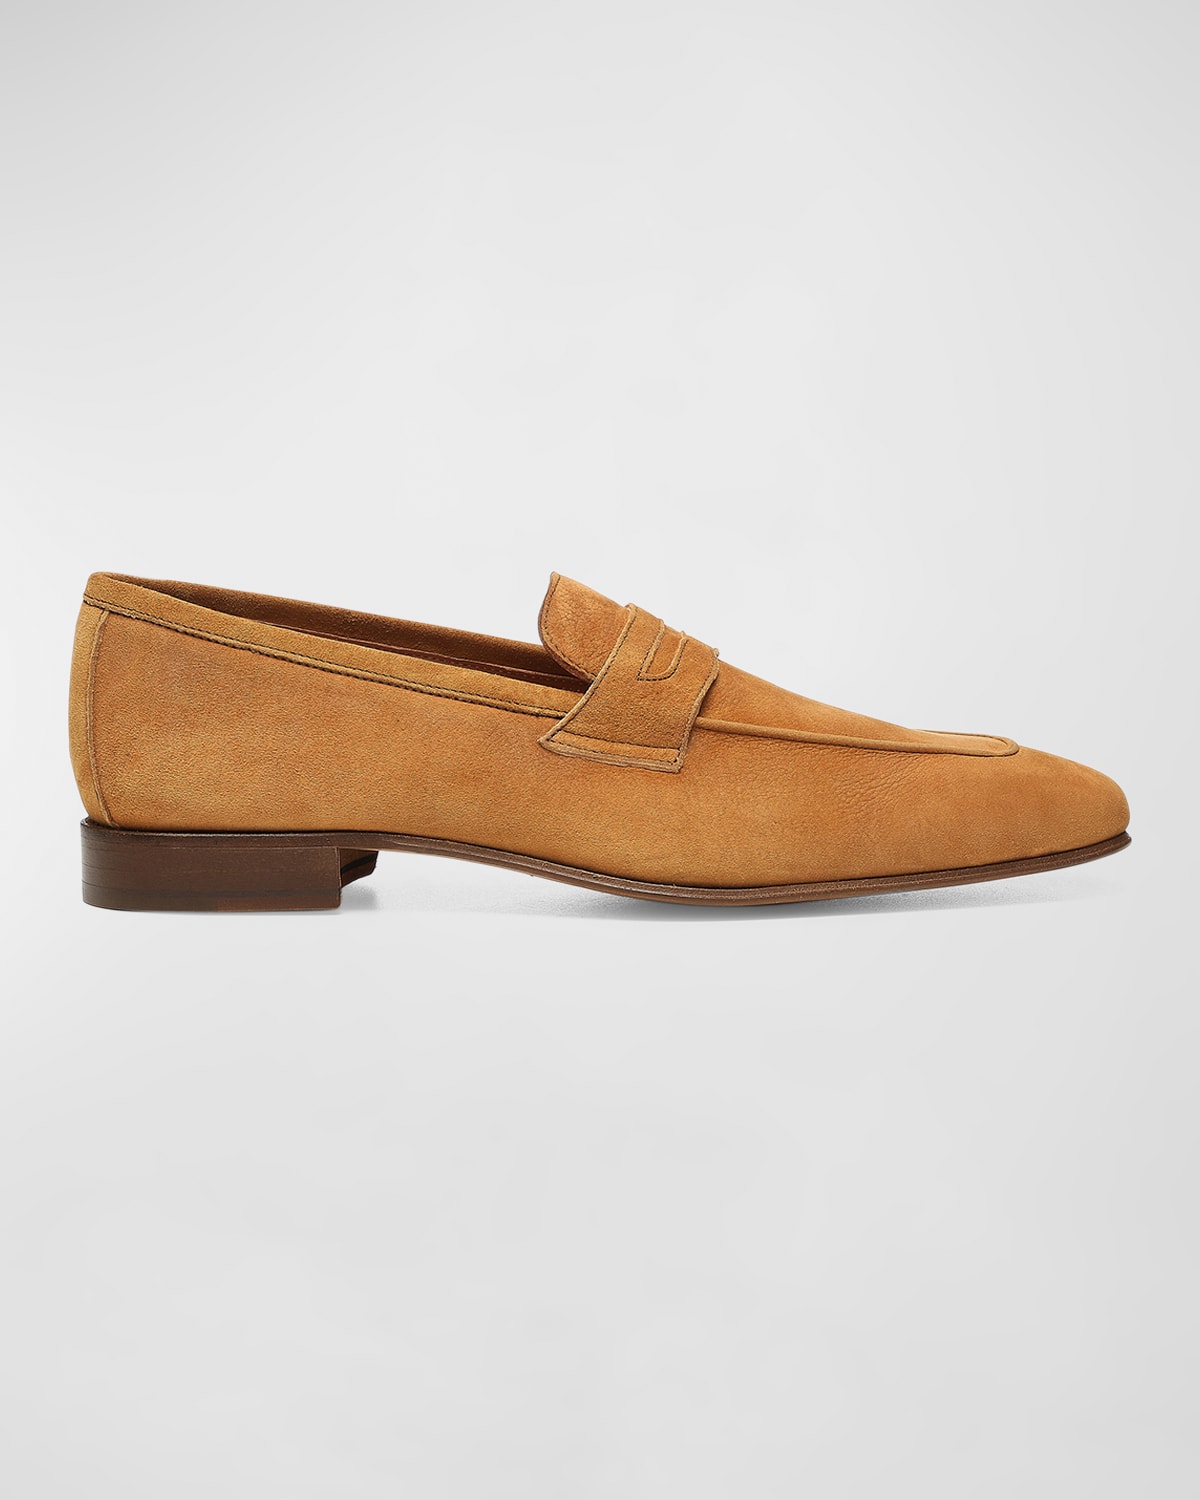 Brunello Cucinelli Men's Suede Leather Penny Loafers | Neiman Marcus